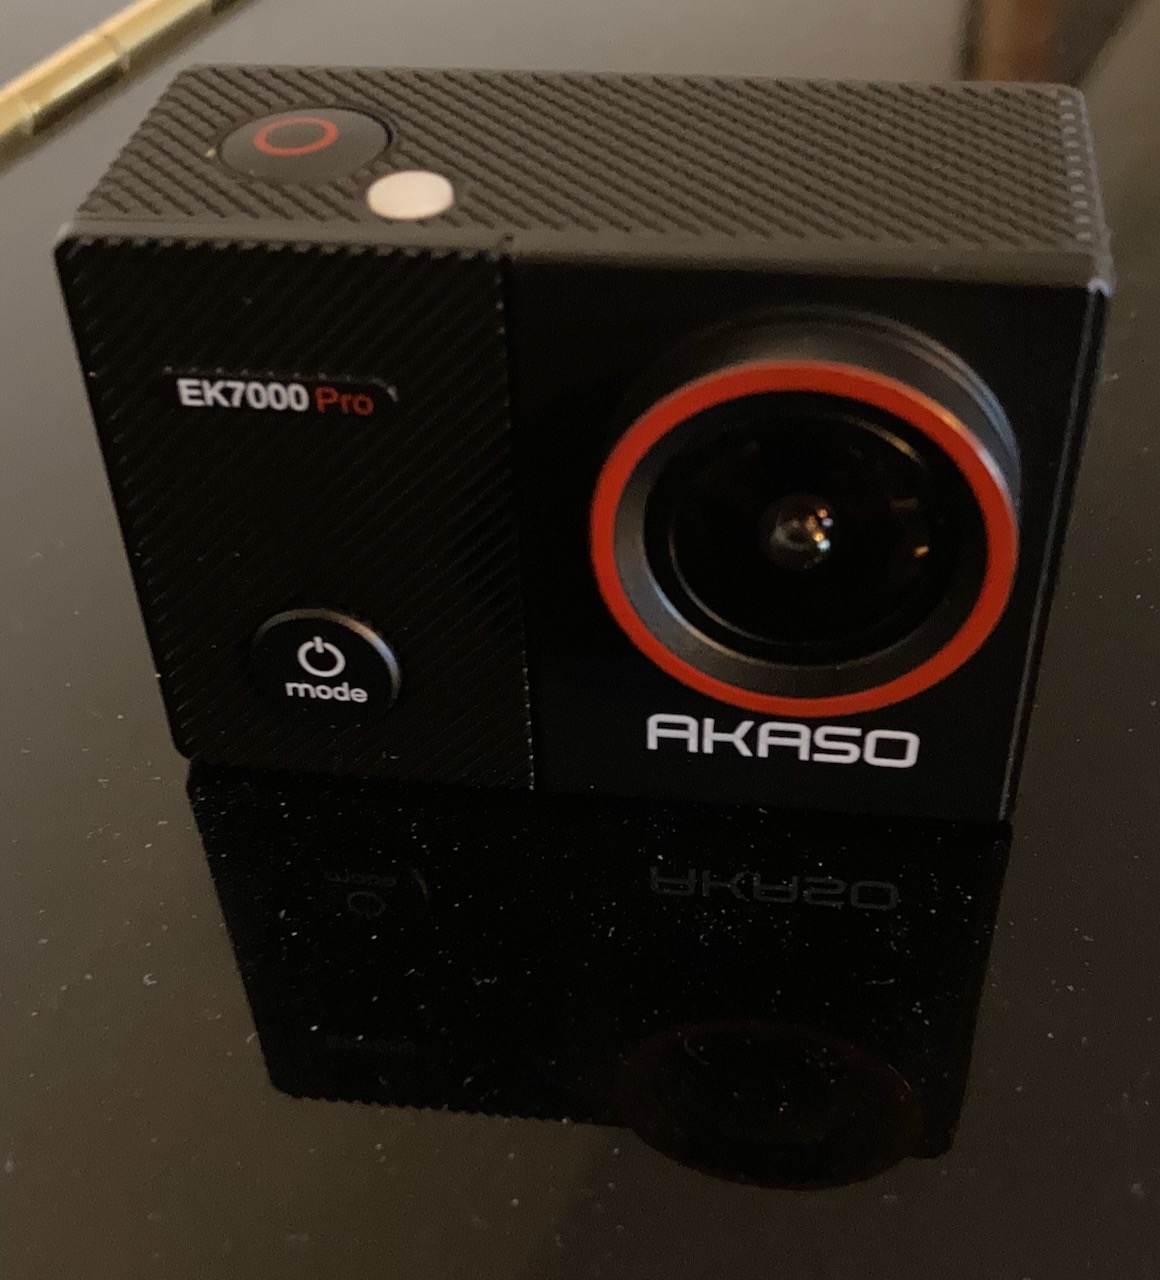 AKASO EK7000 Pro Ultra HD 4K Action Camera Review - Page 4 - eTeknix